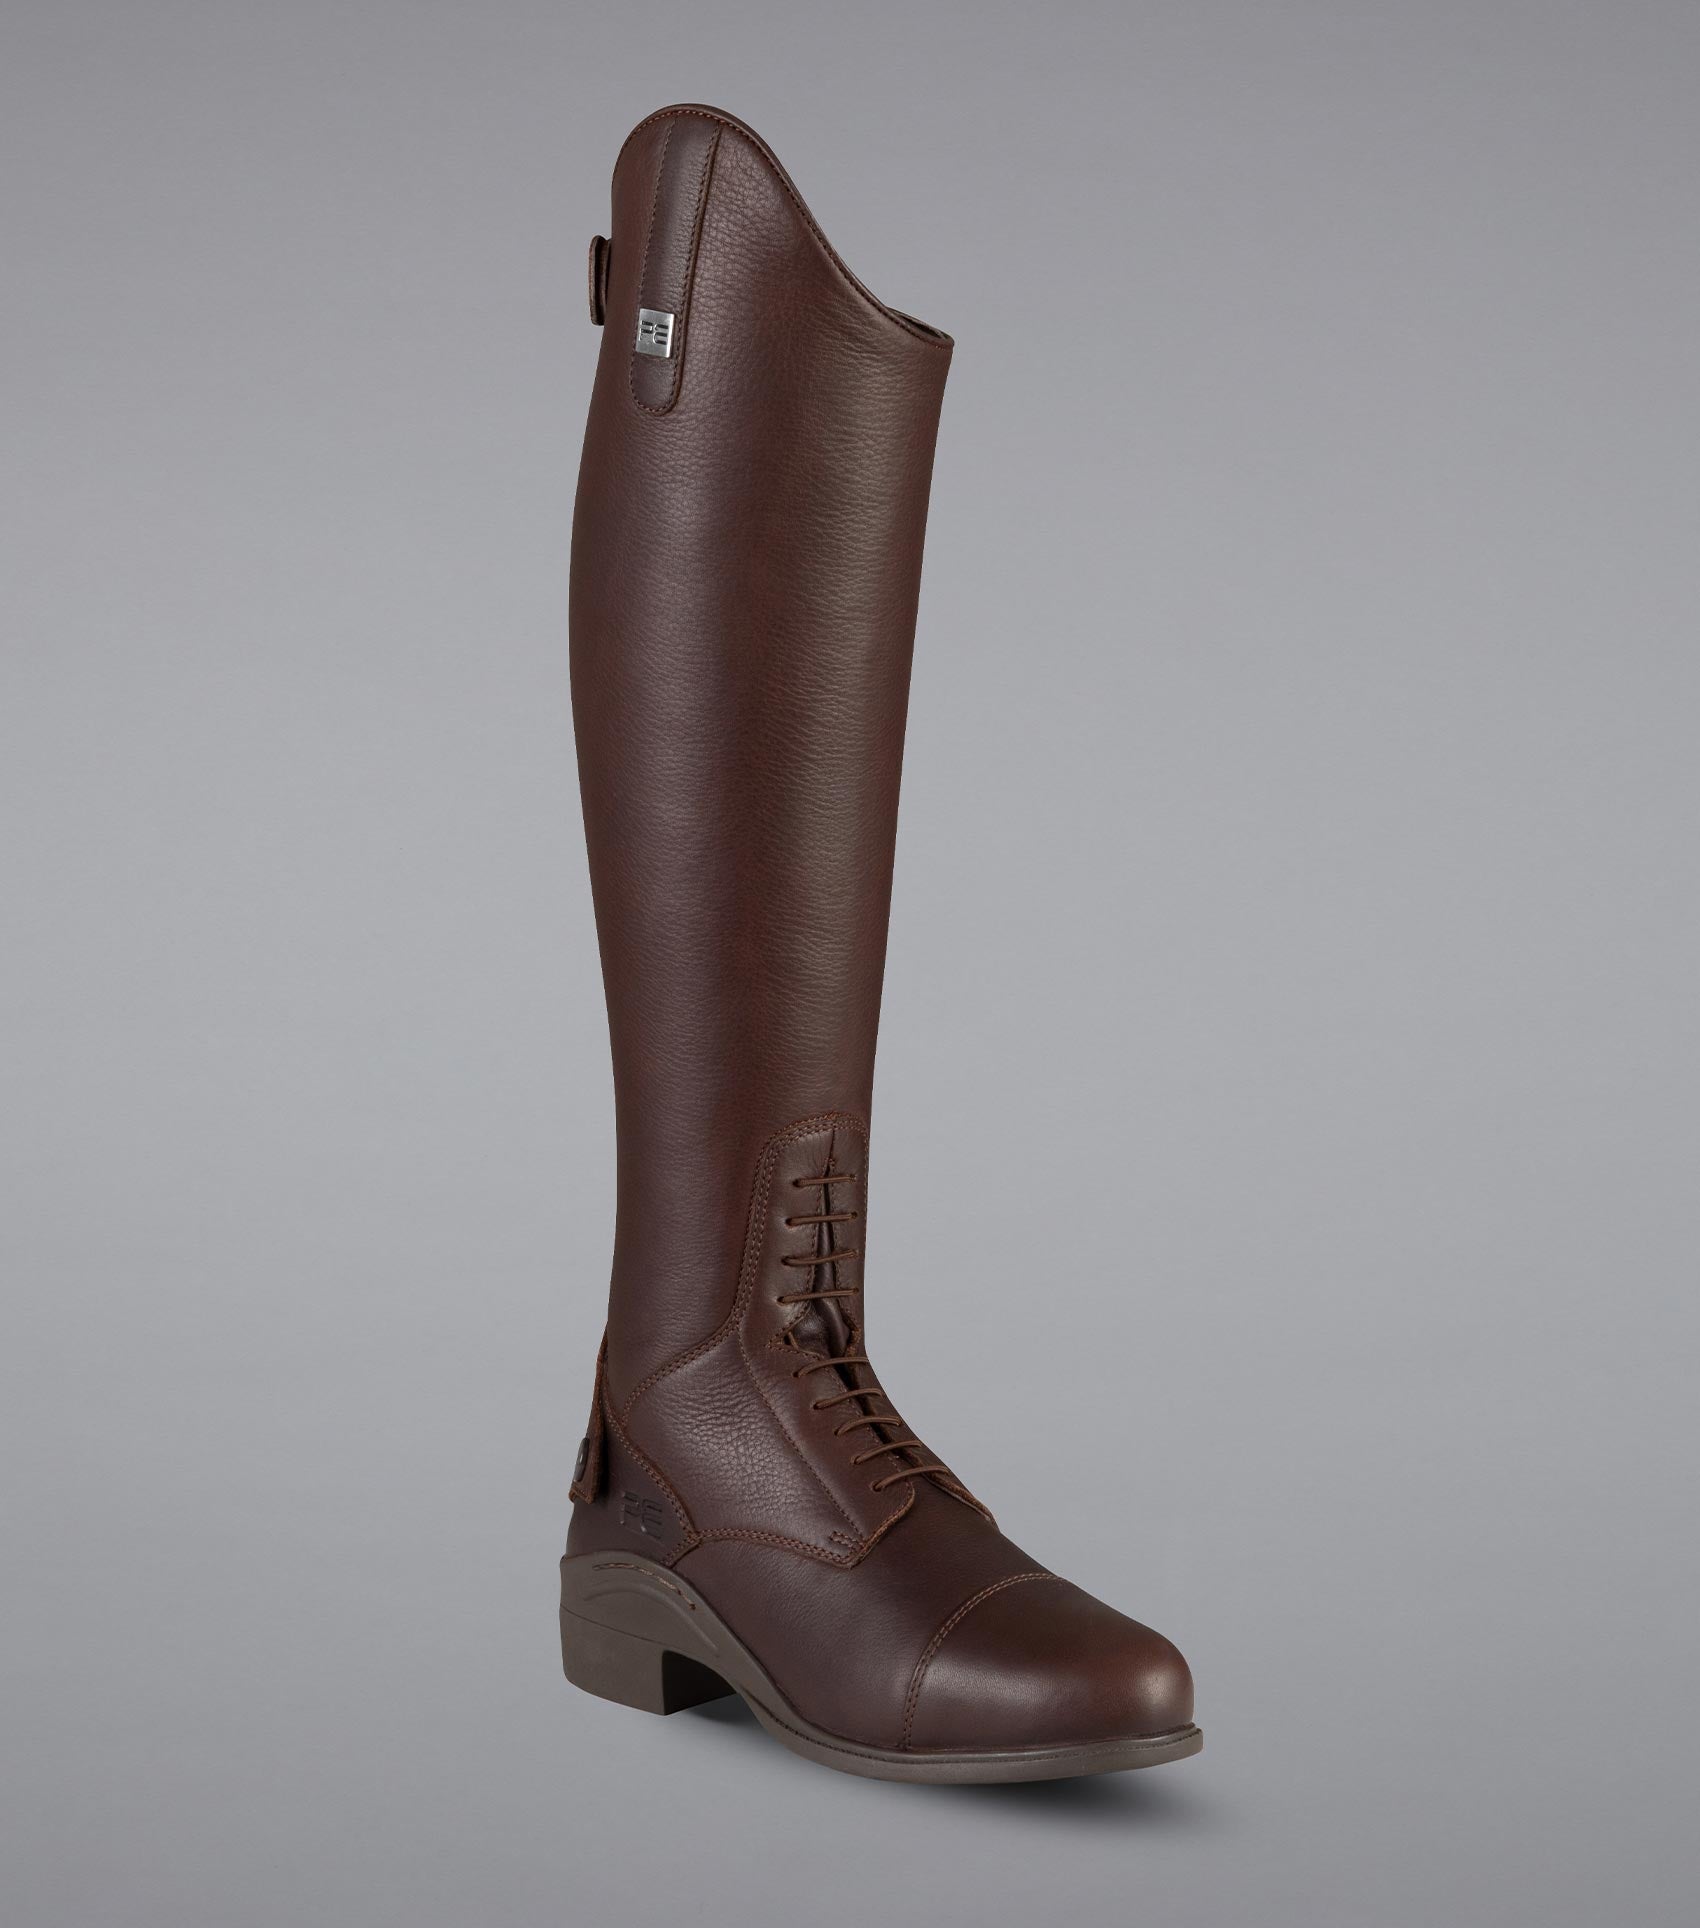 Description:Vallardi Ladies Leather Field Tall Riding Boot_Colour:Brown_Position:1